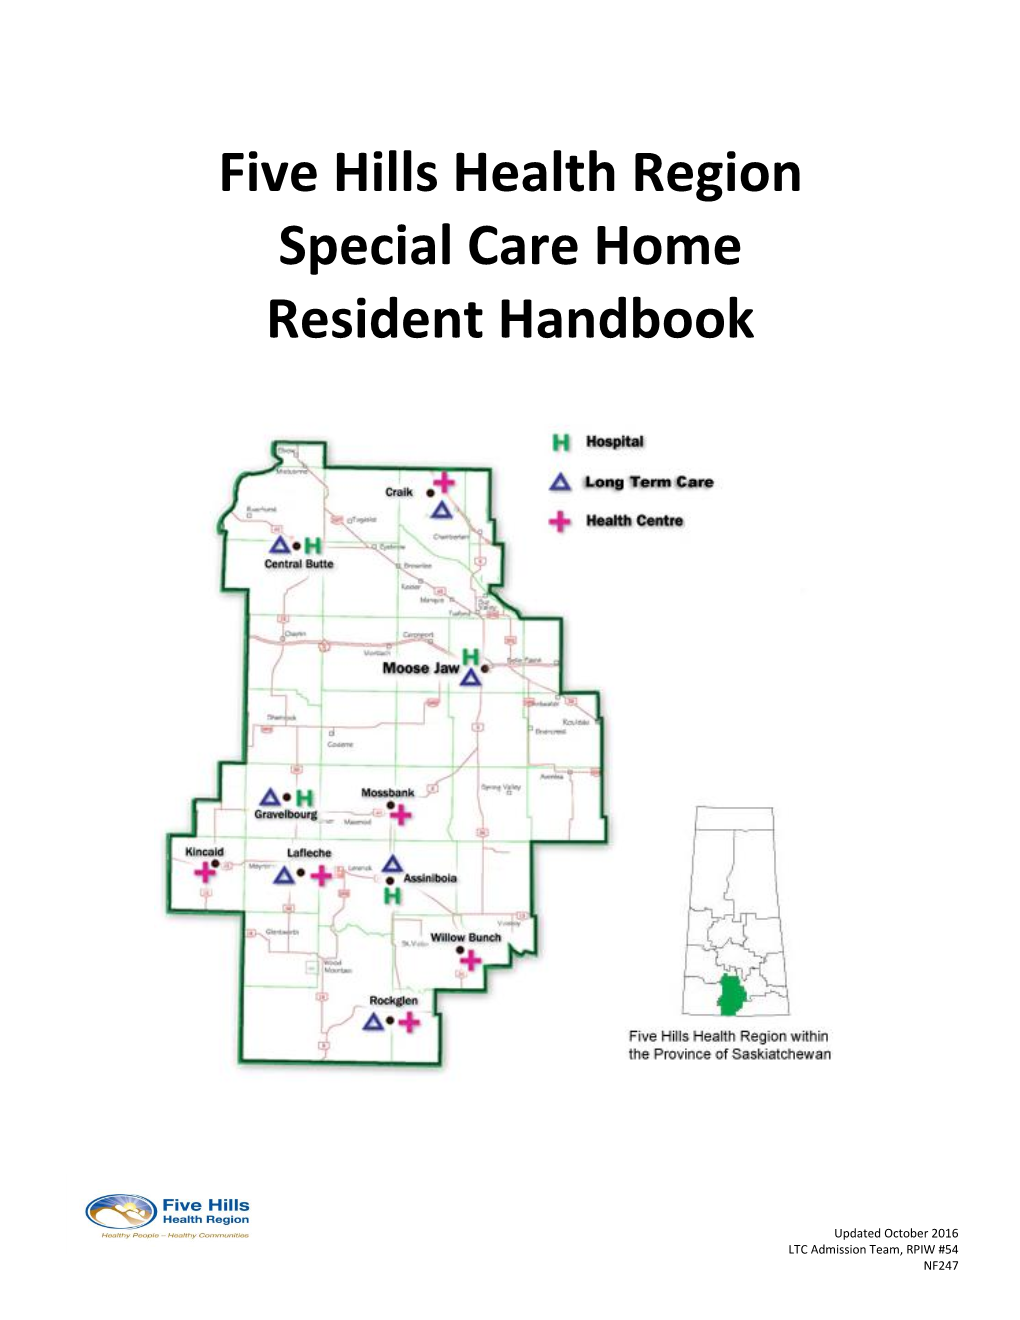 Five Hills Health Region Special Care Home Resident Handbook